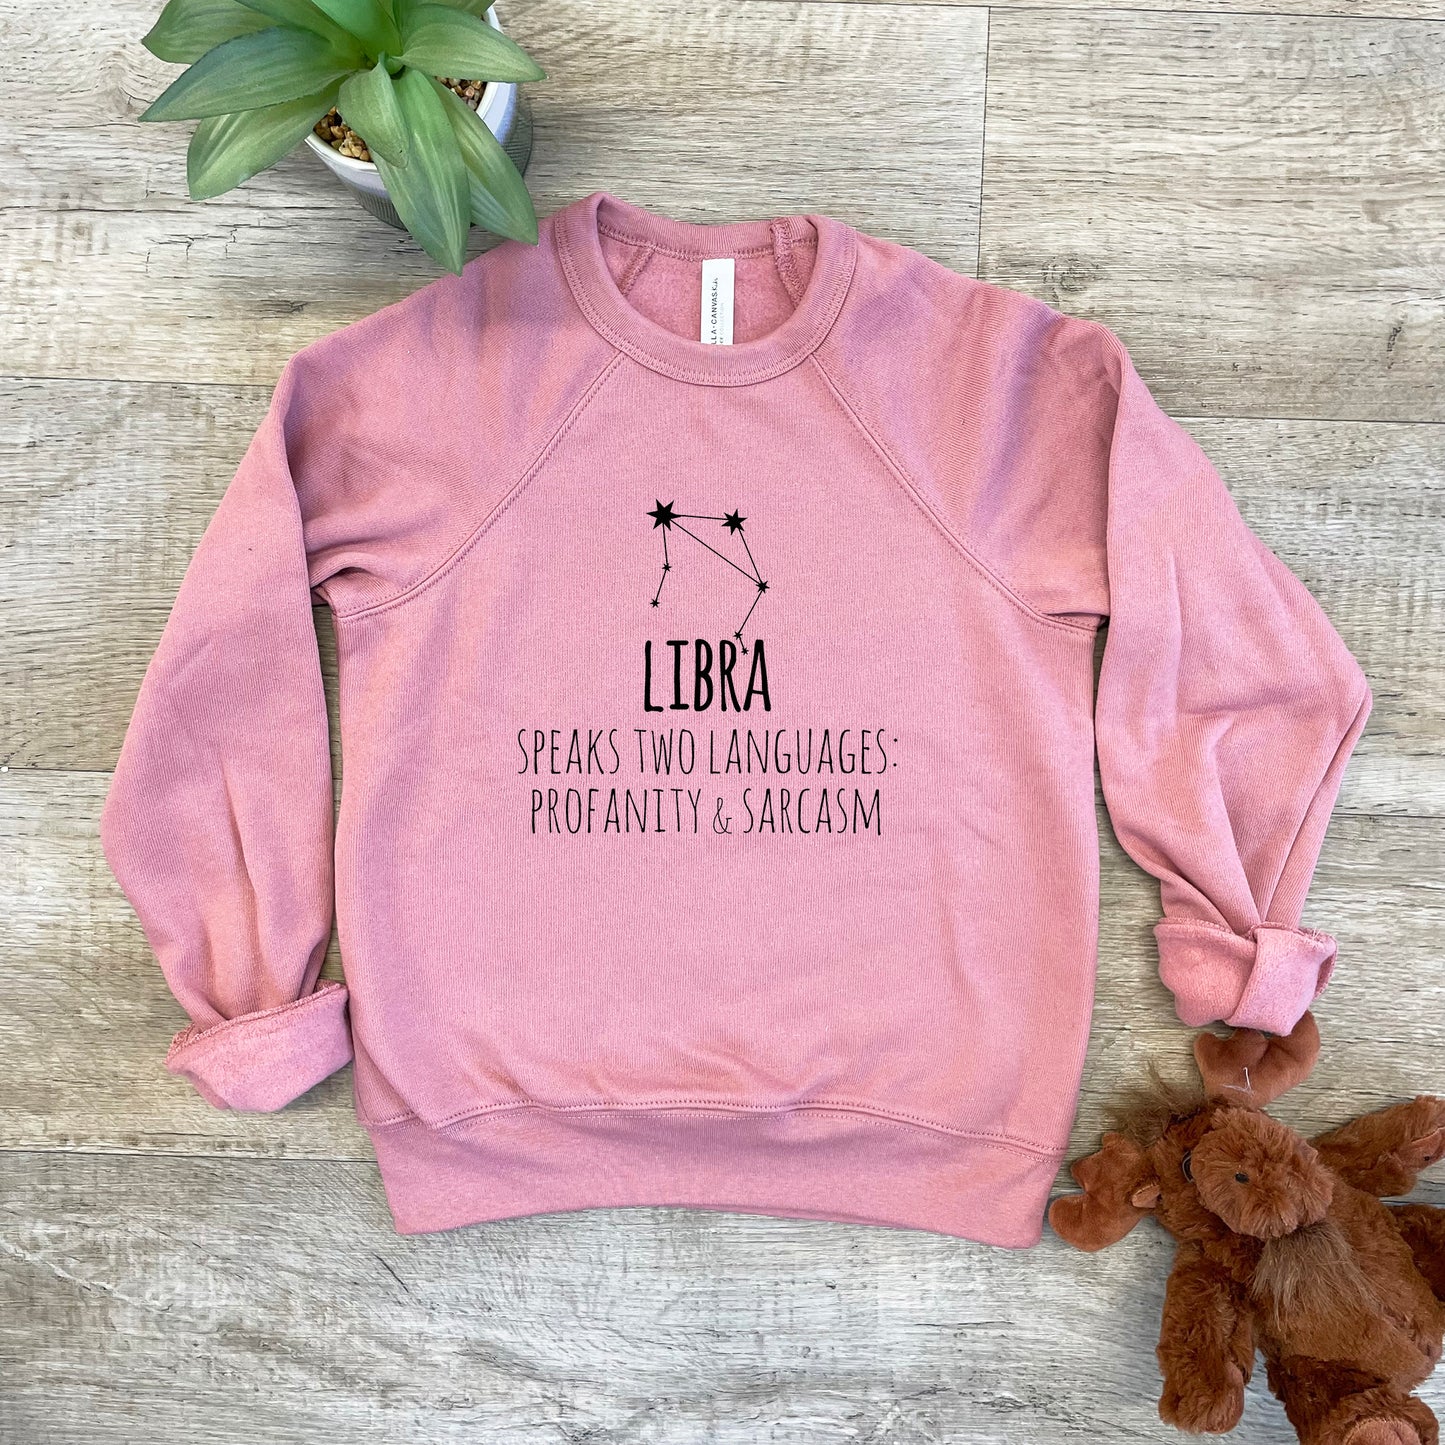 Libra - Kid's Sweatshirt - Heather Gray or Mauve